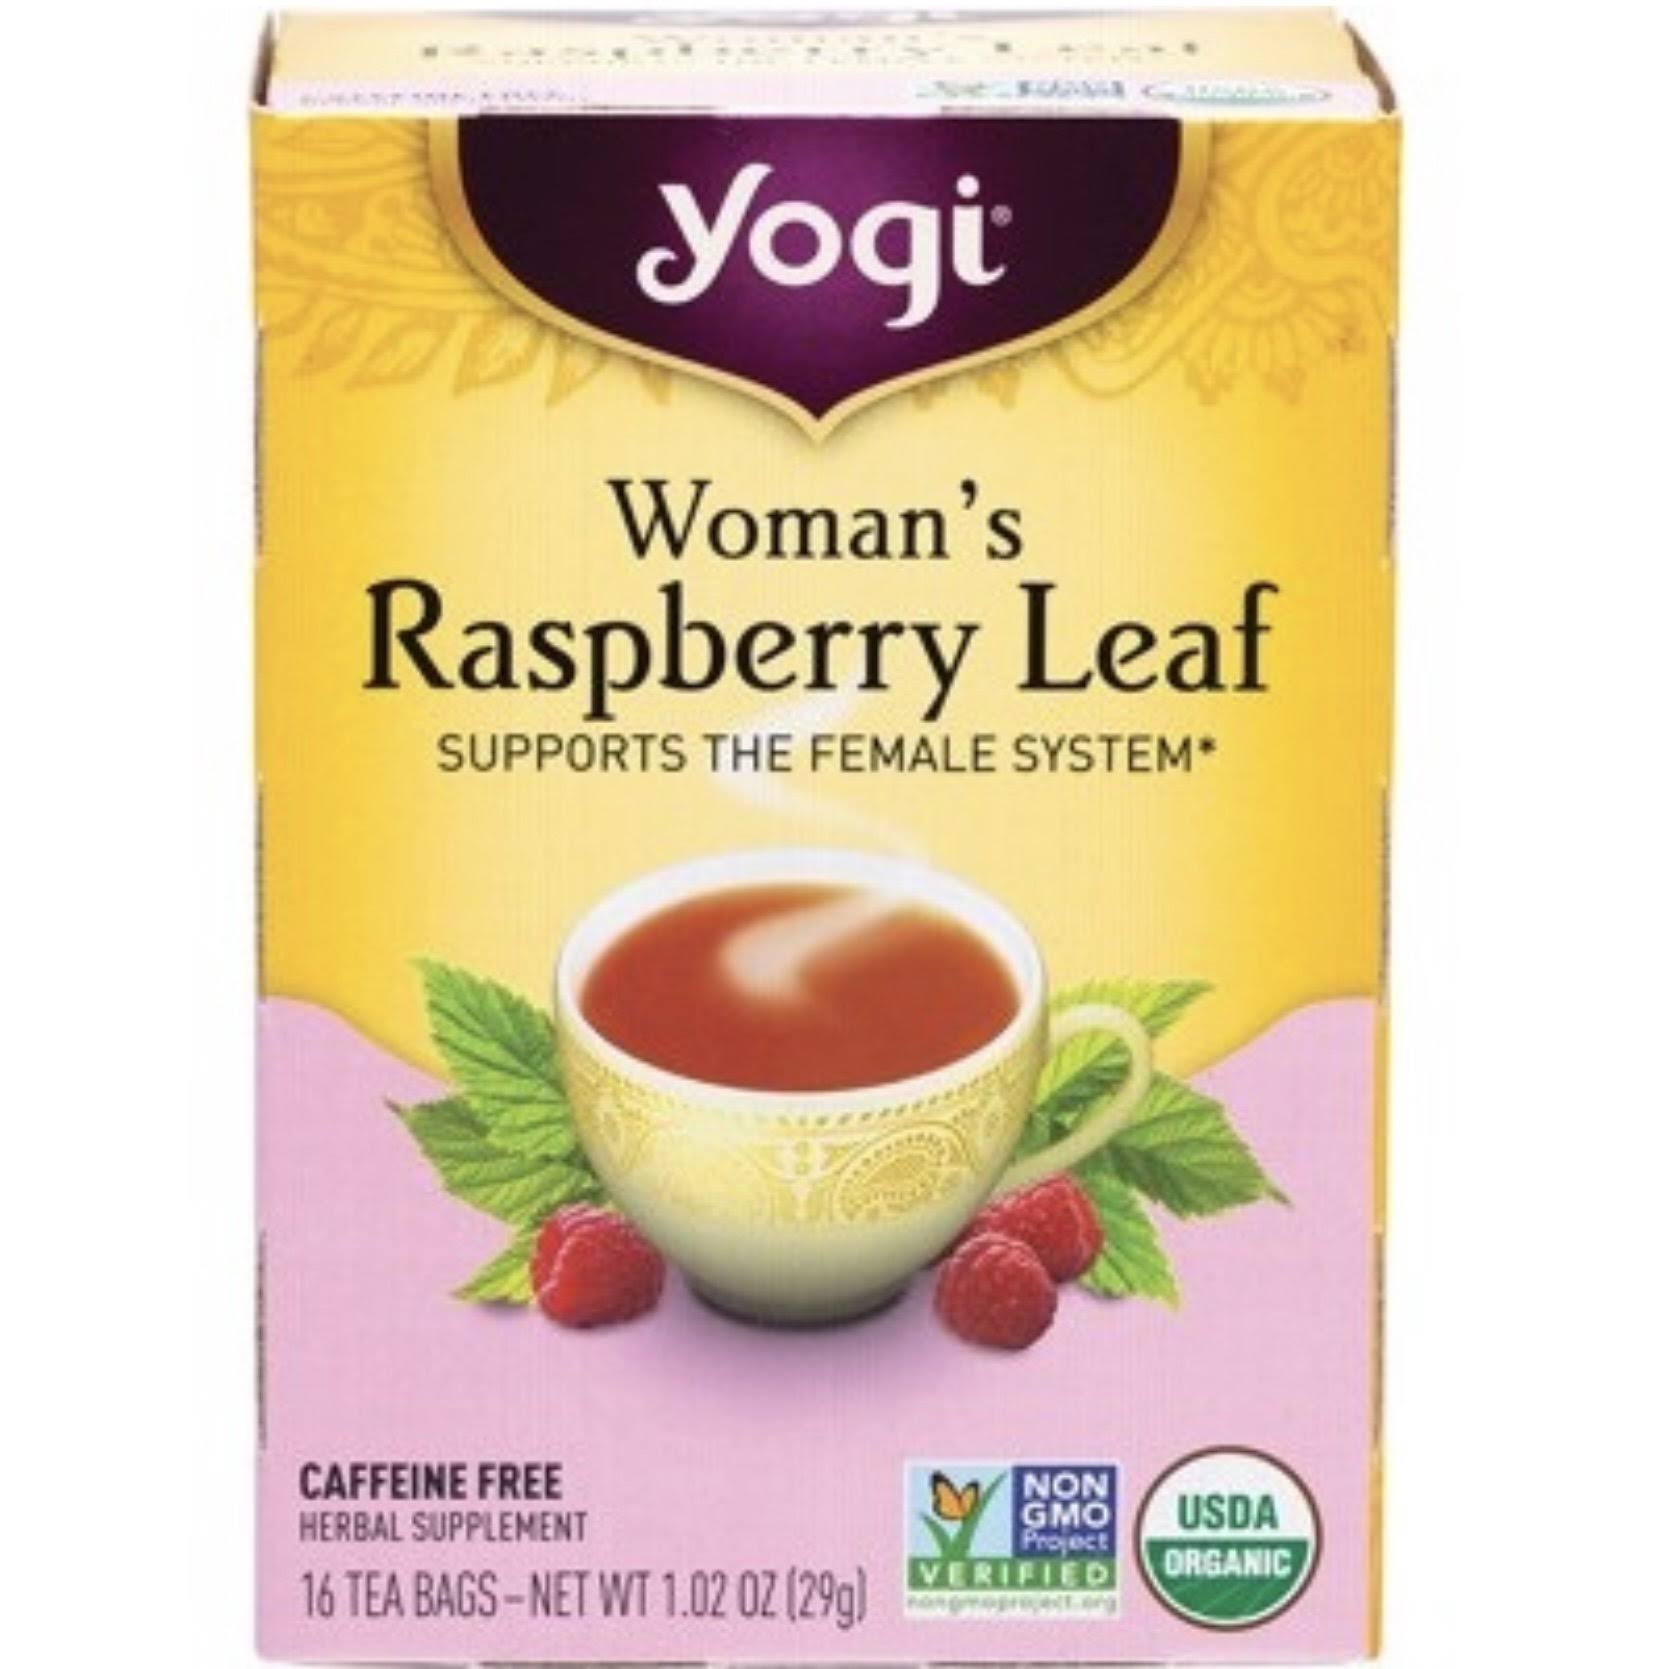 Yogi Woman's Raspberry Leaf Tea - 16ct, 1.02oz